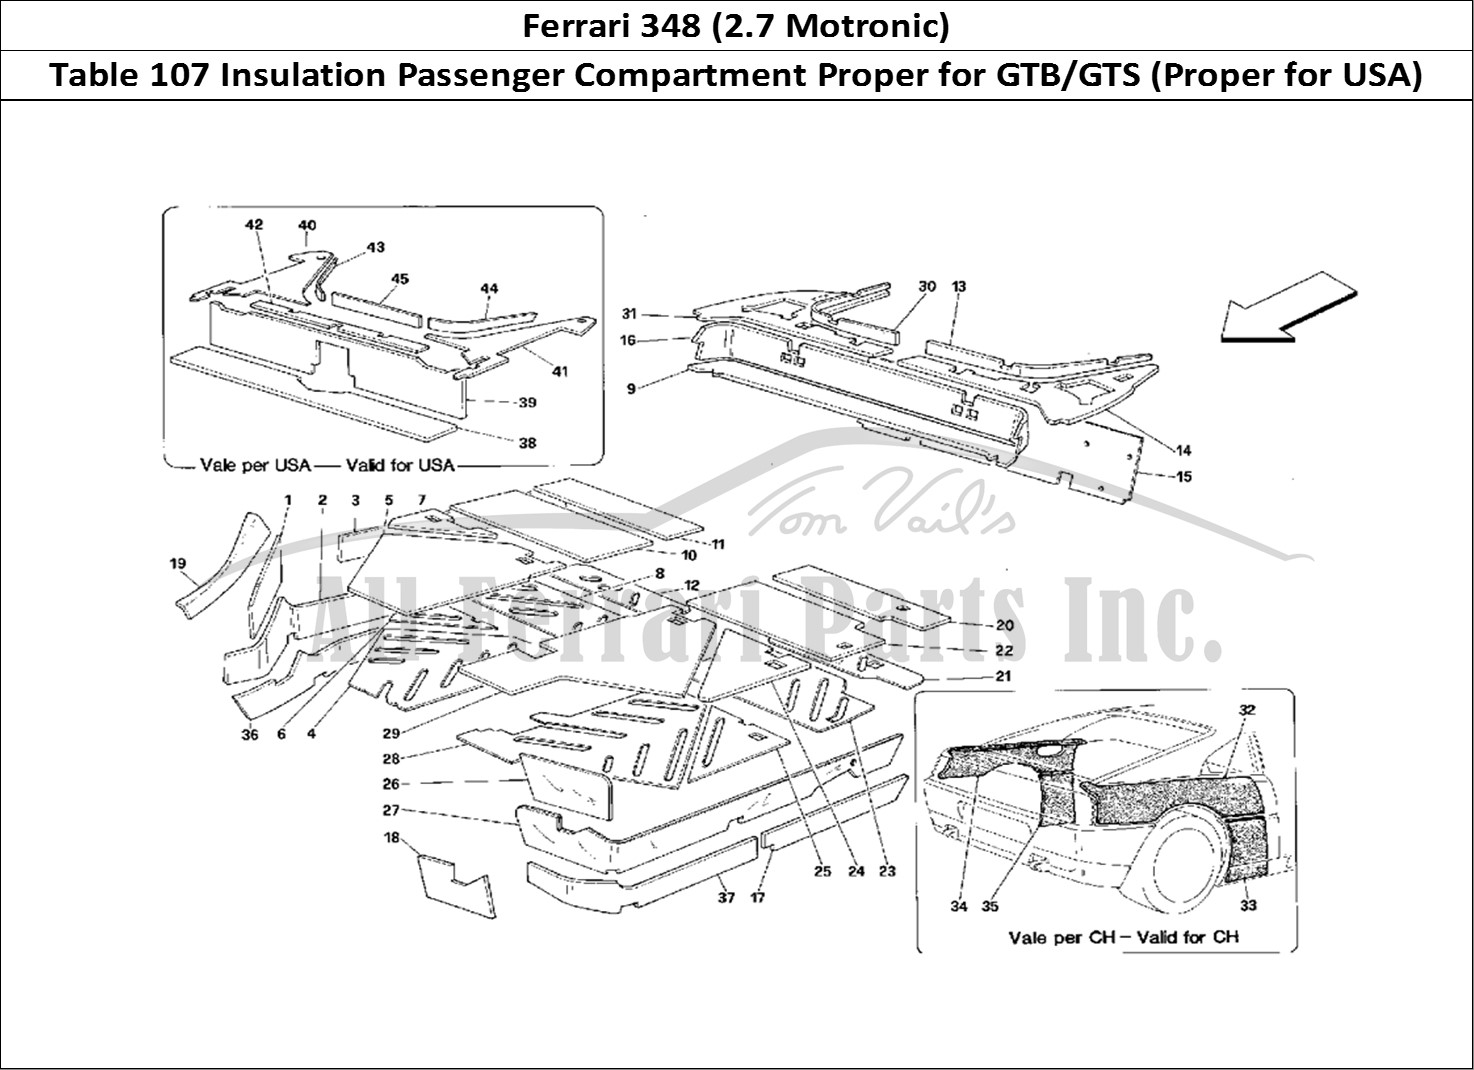 Ferrari Parts Ferrari 348 (2.7 Motronic) Page 107 Passengers Comp. Insulati